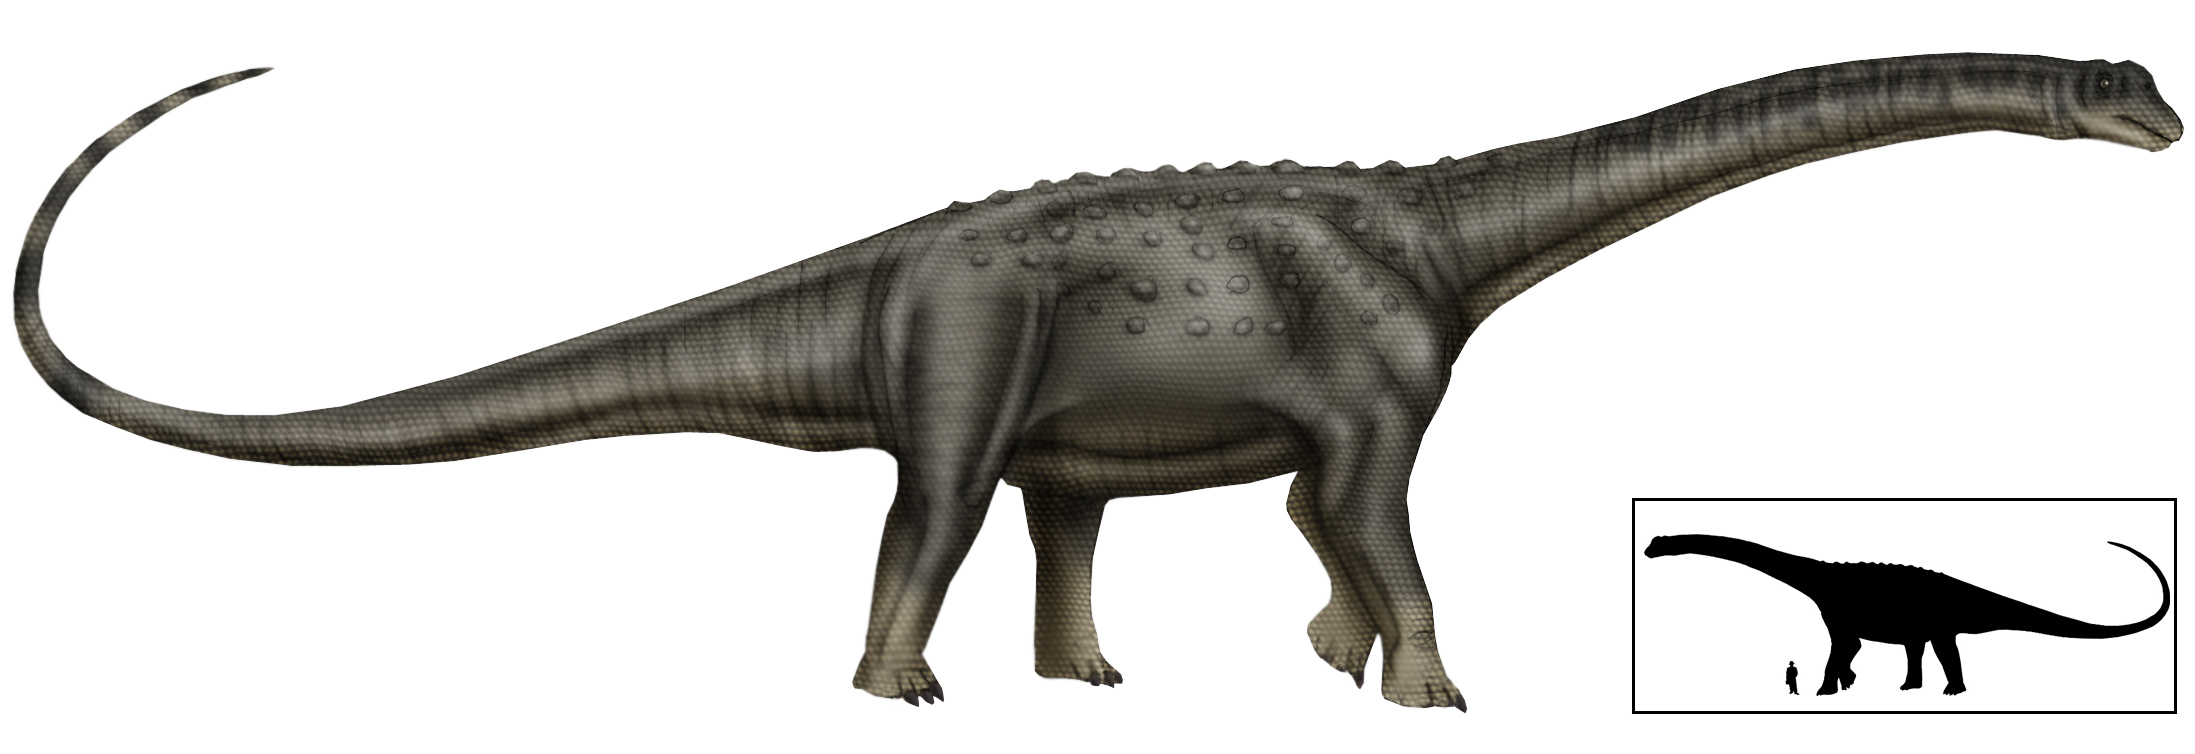 Puertasaurus reuili - Wikipedia, la enciclopedia libre